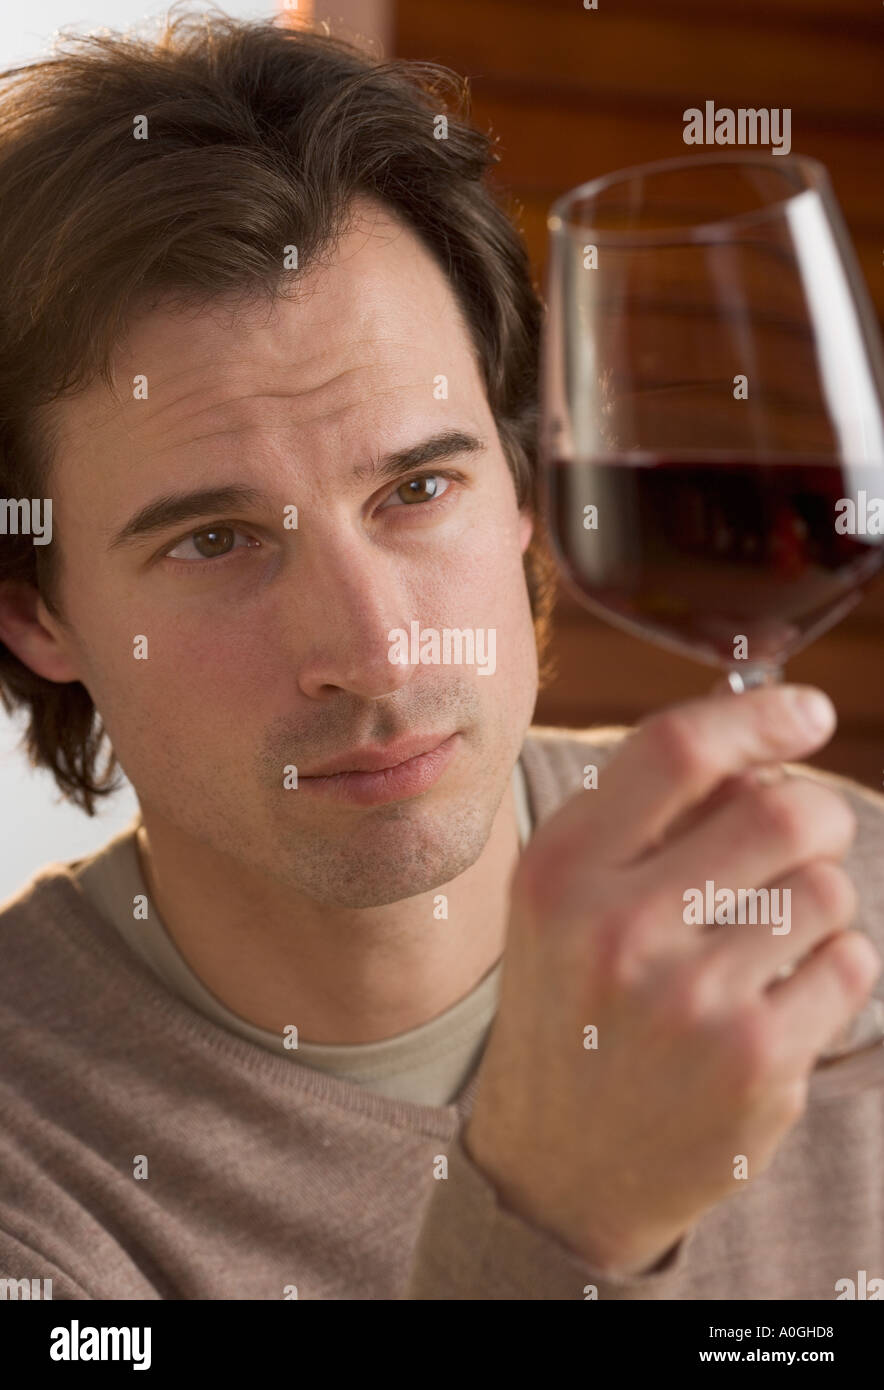 Closeup of man examining red wine Stock Photo